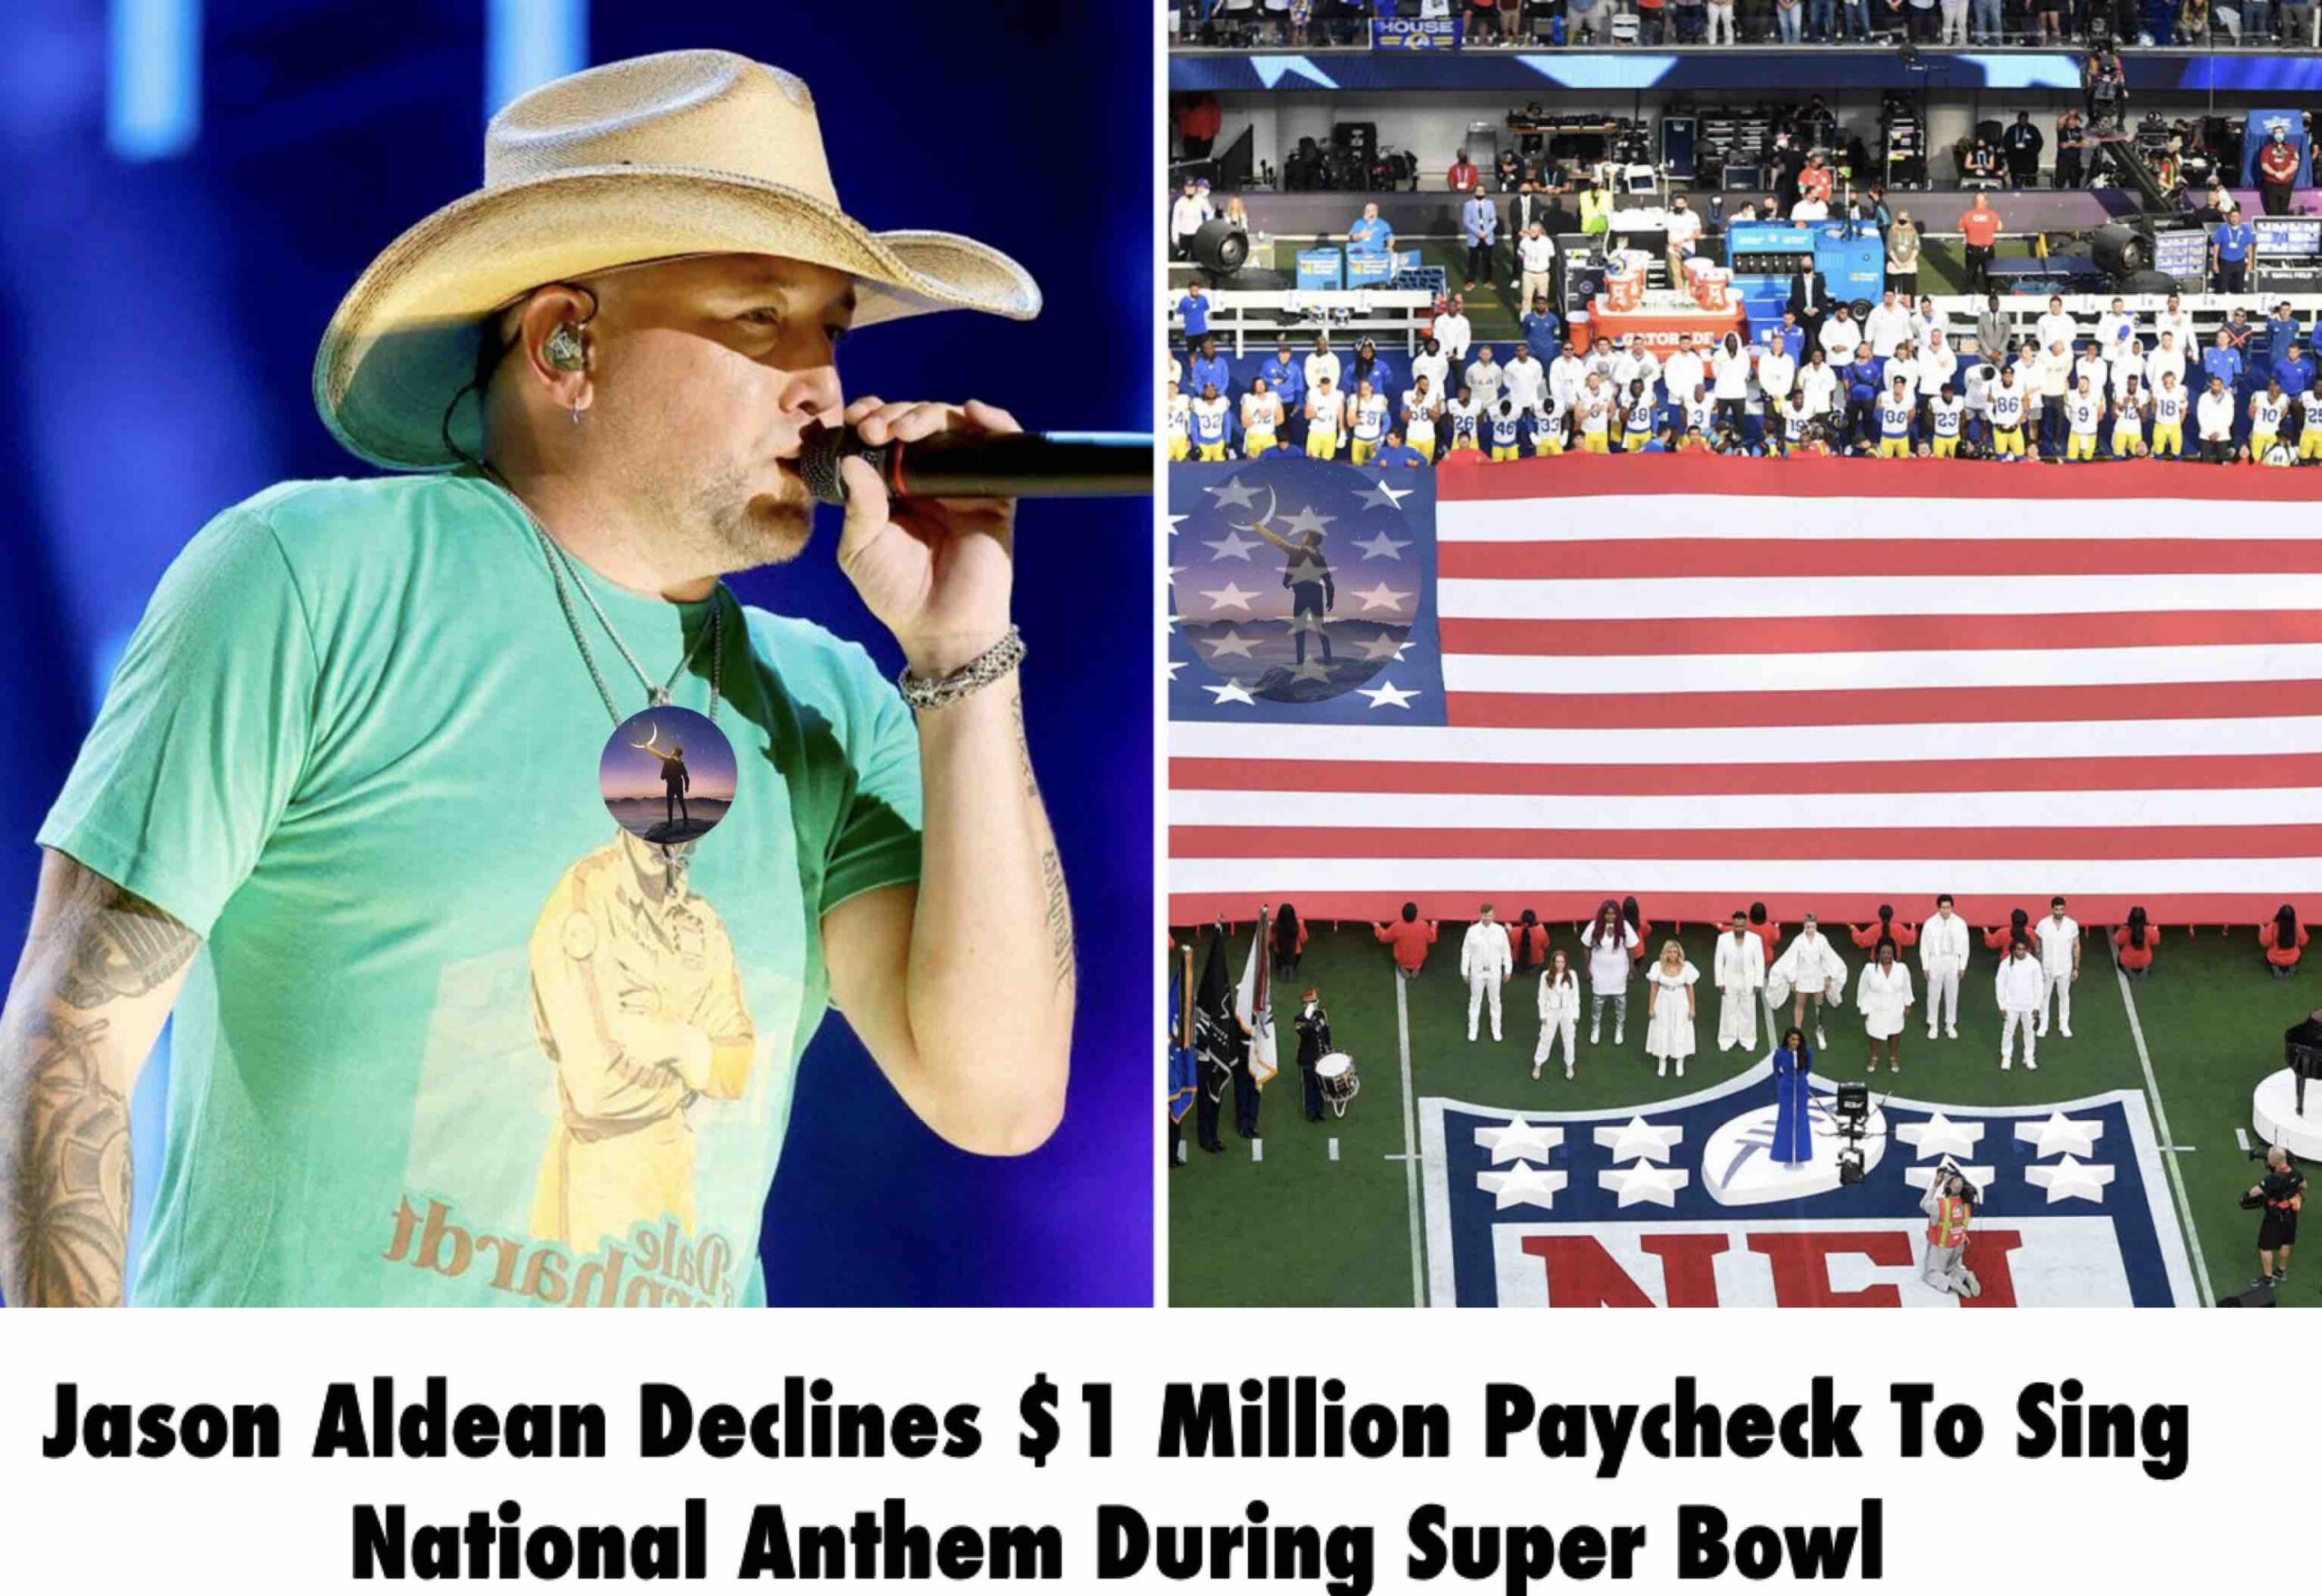 TRUE: Jason Aldean Declines $1 Million Paycheck To Sing National Anthem During Super Bowl